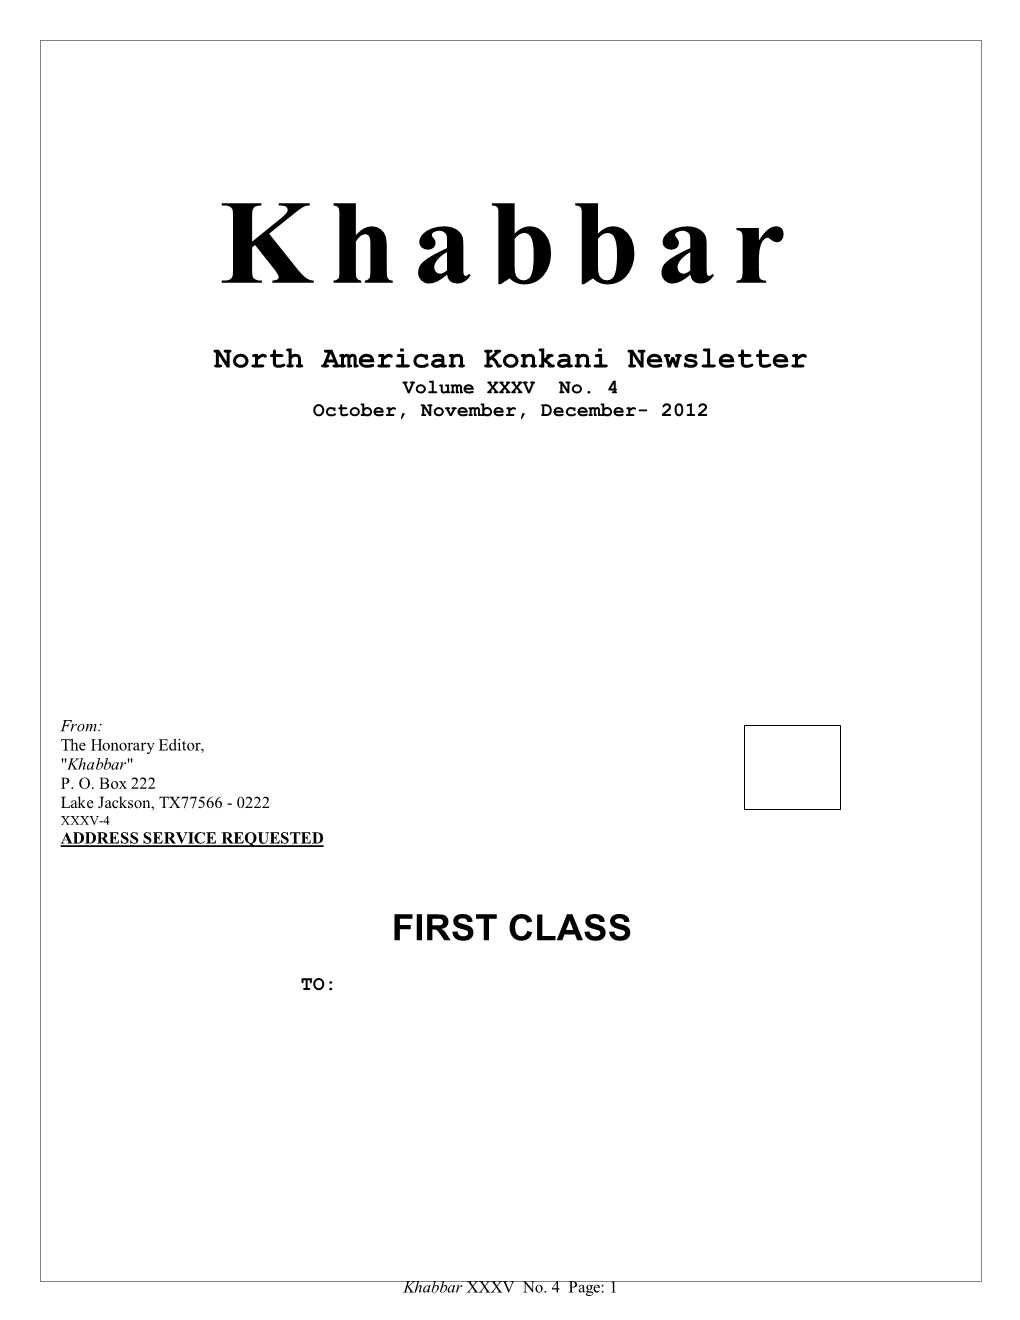 Khabbar Vol. XXXV No. 4 (October, November, December